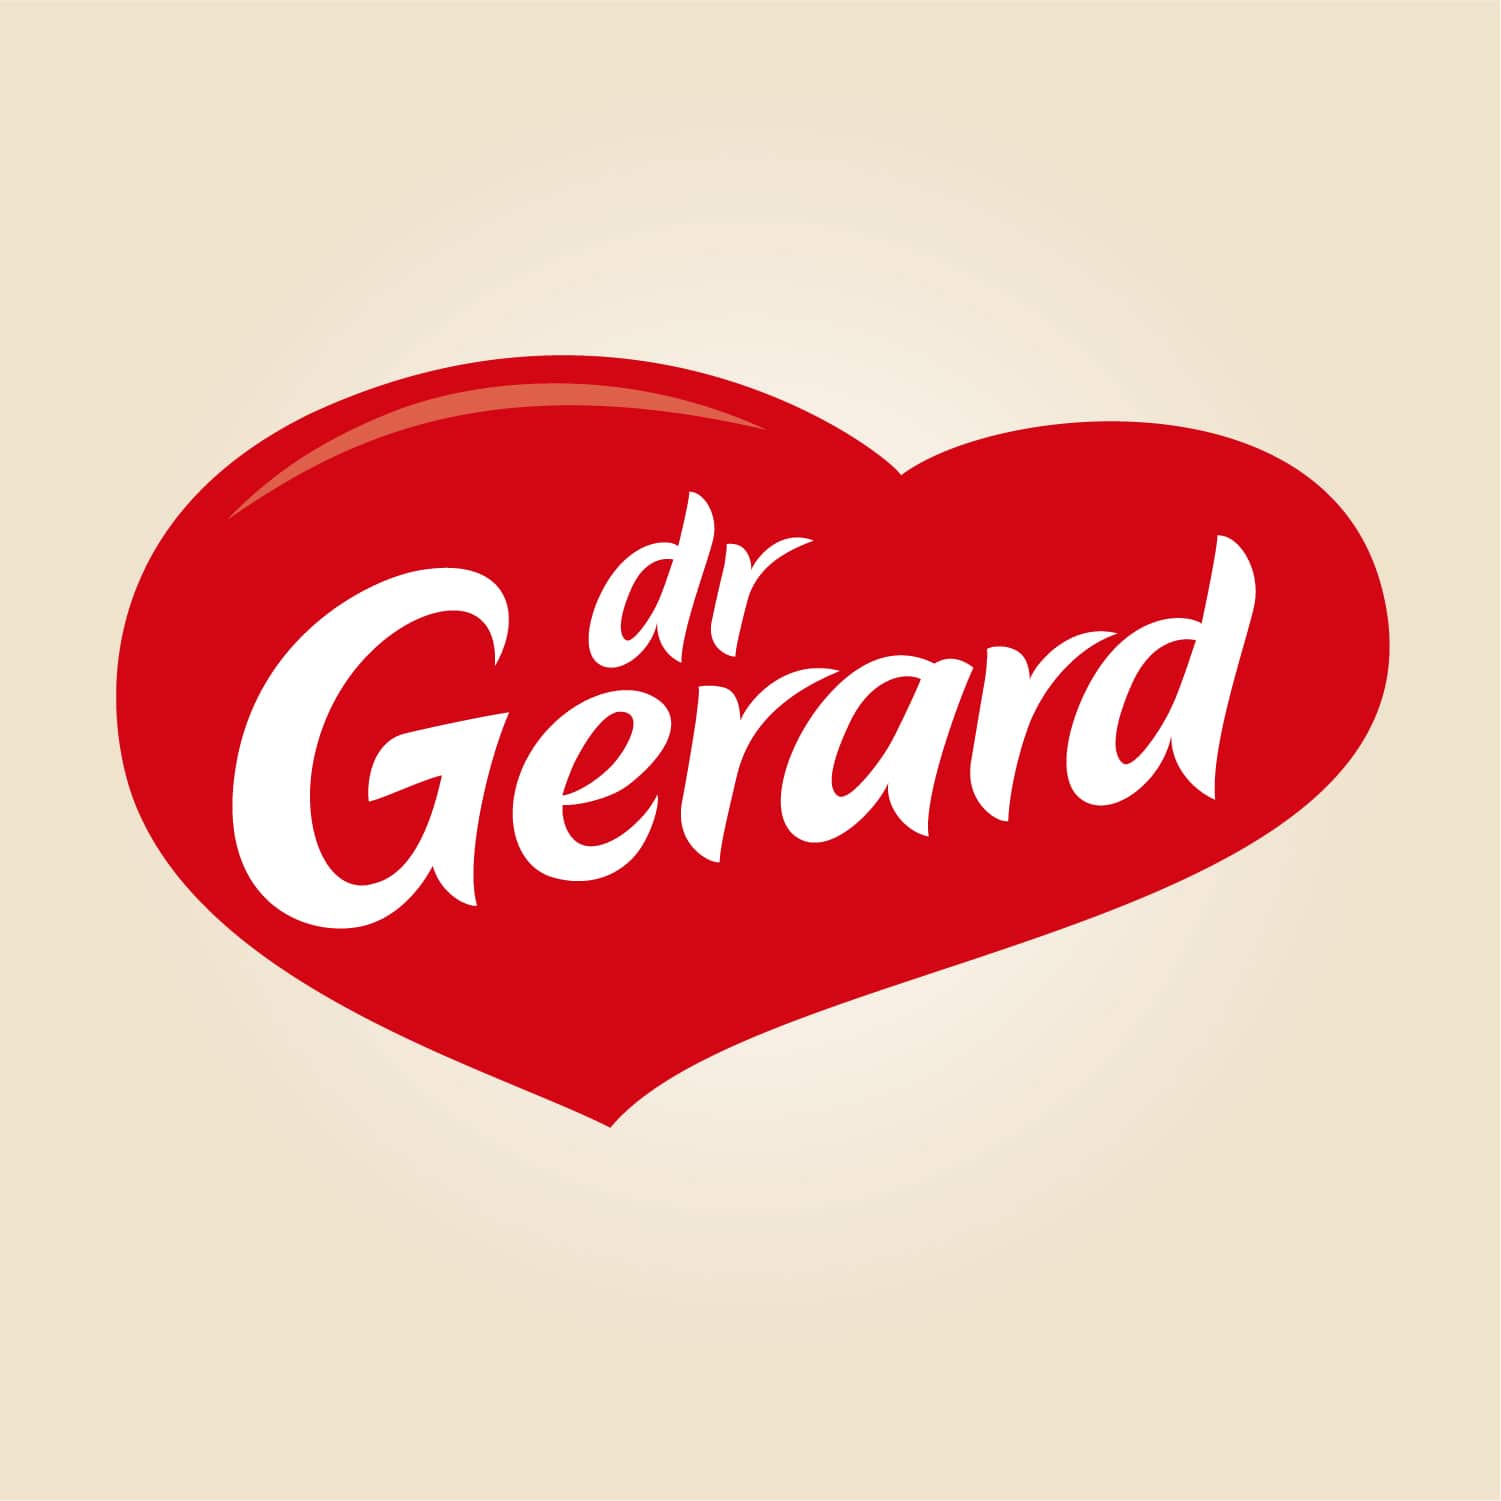 Dr Gerard logo